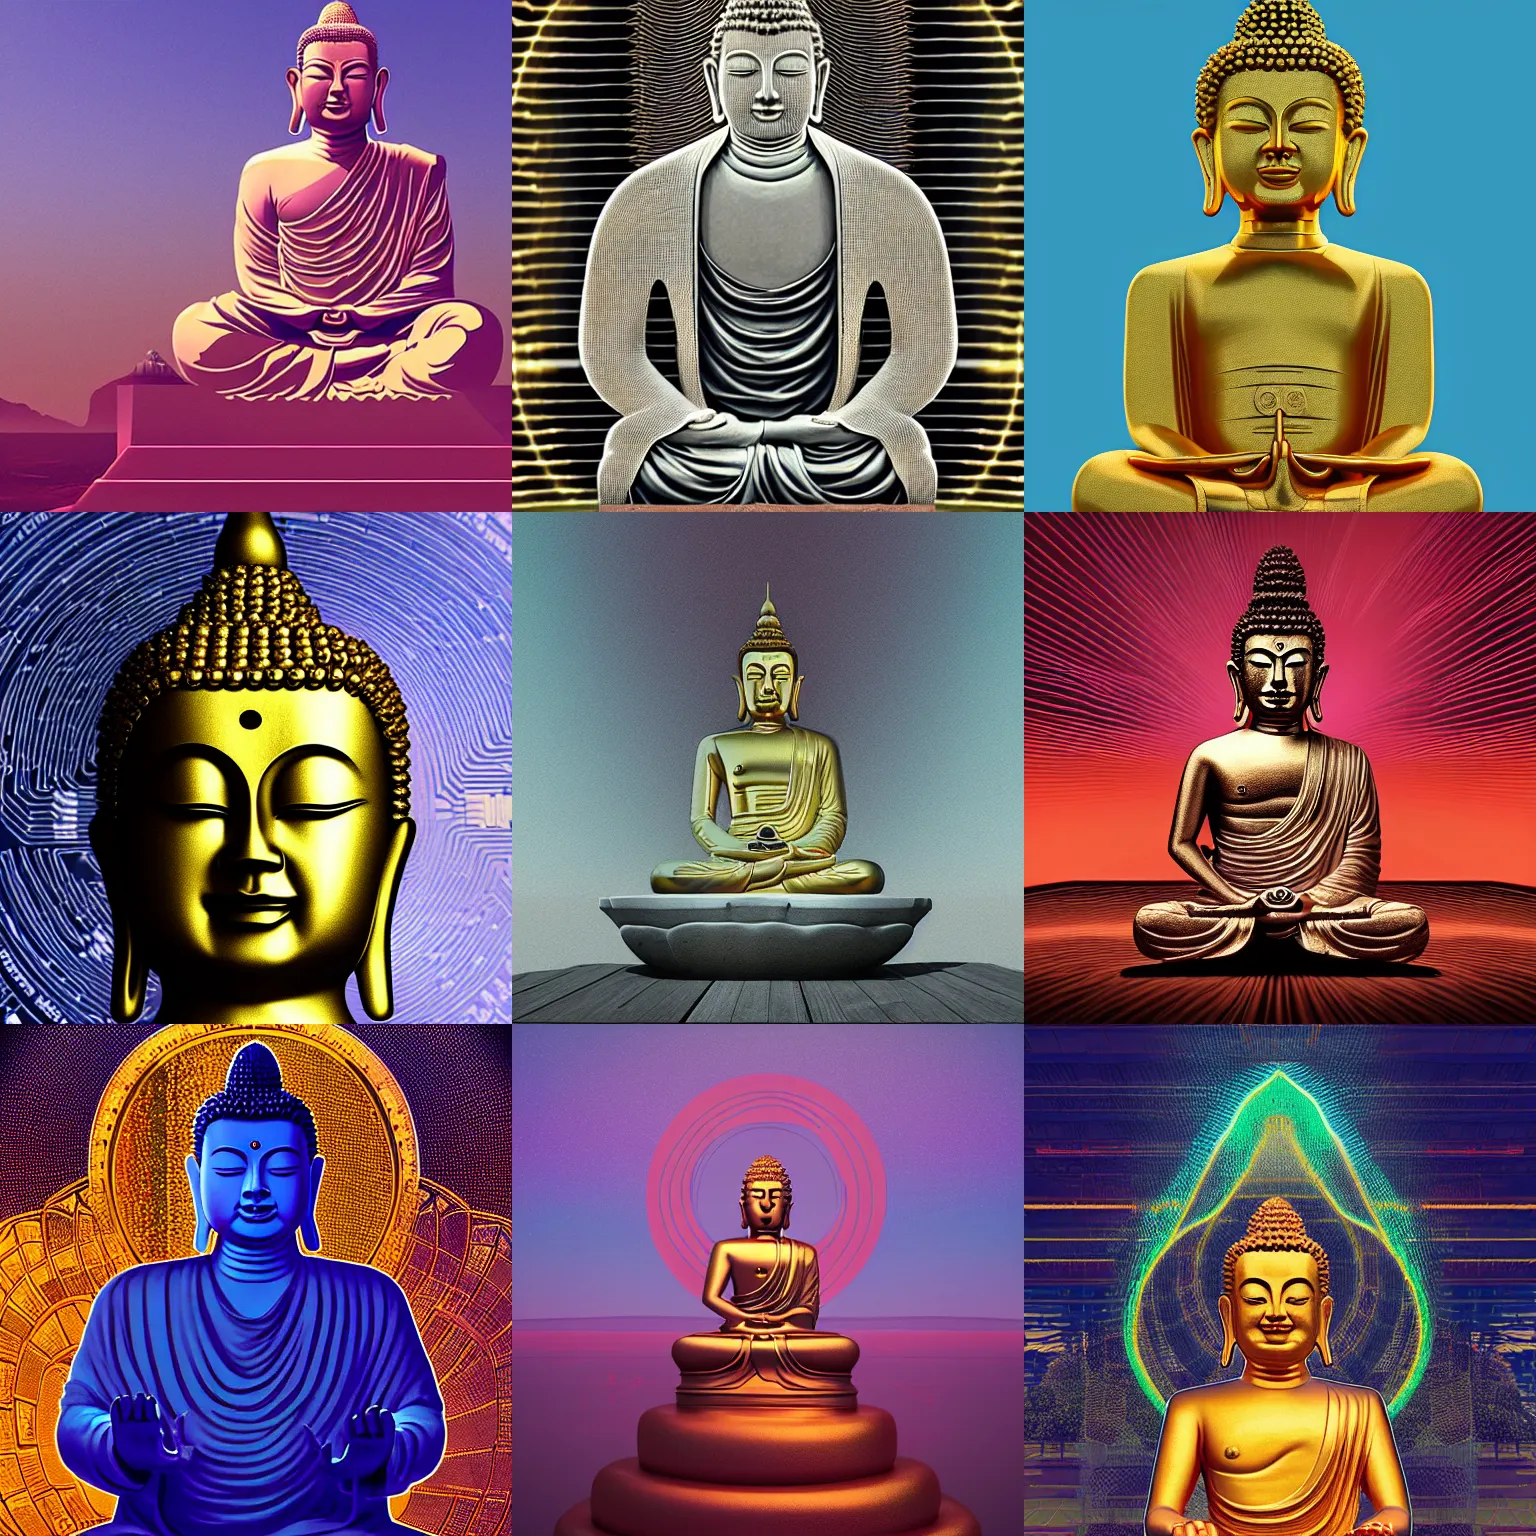 Prompt: Bitcoin Buddha by Beeple award winning digital art